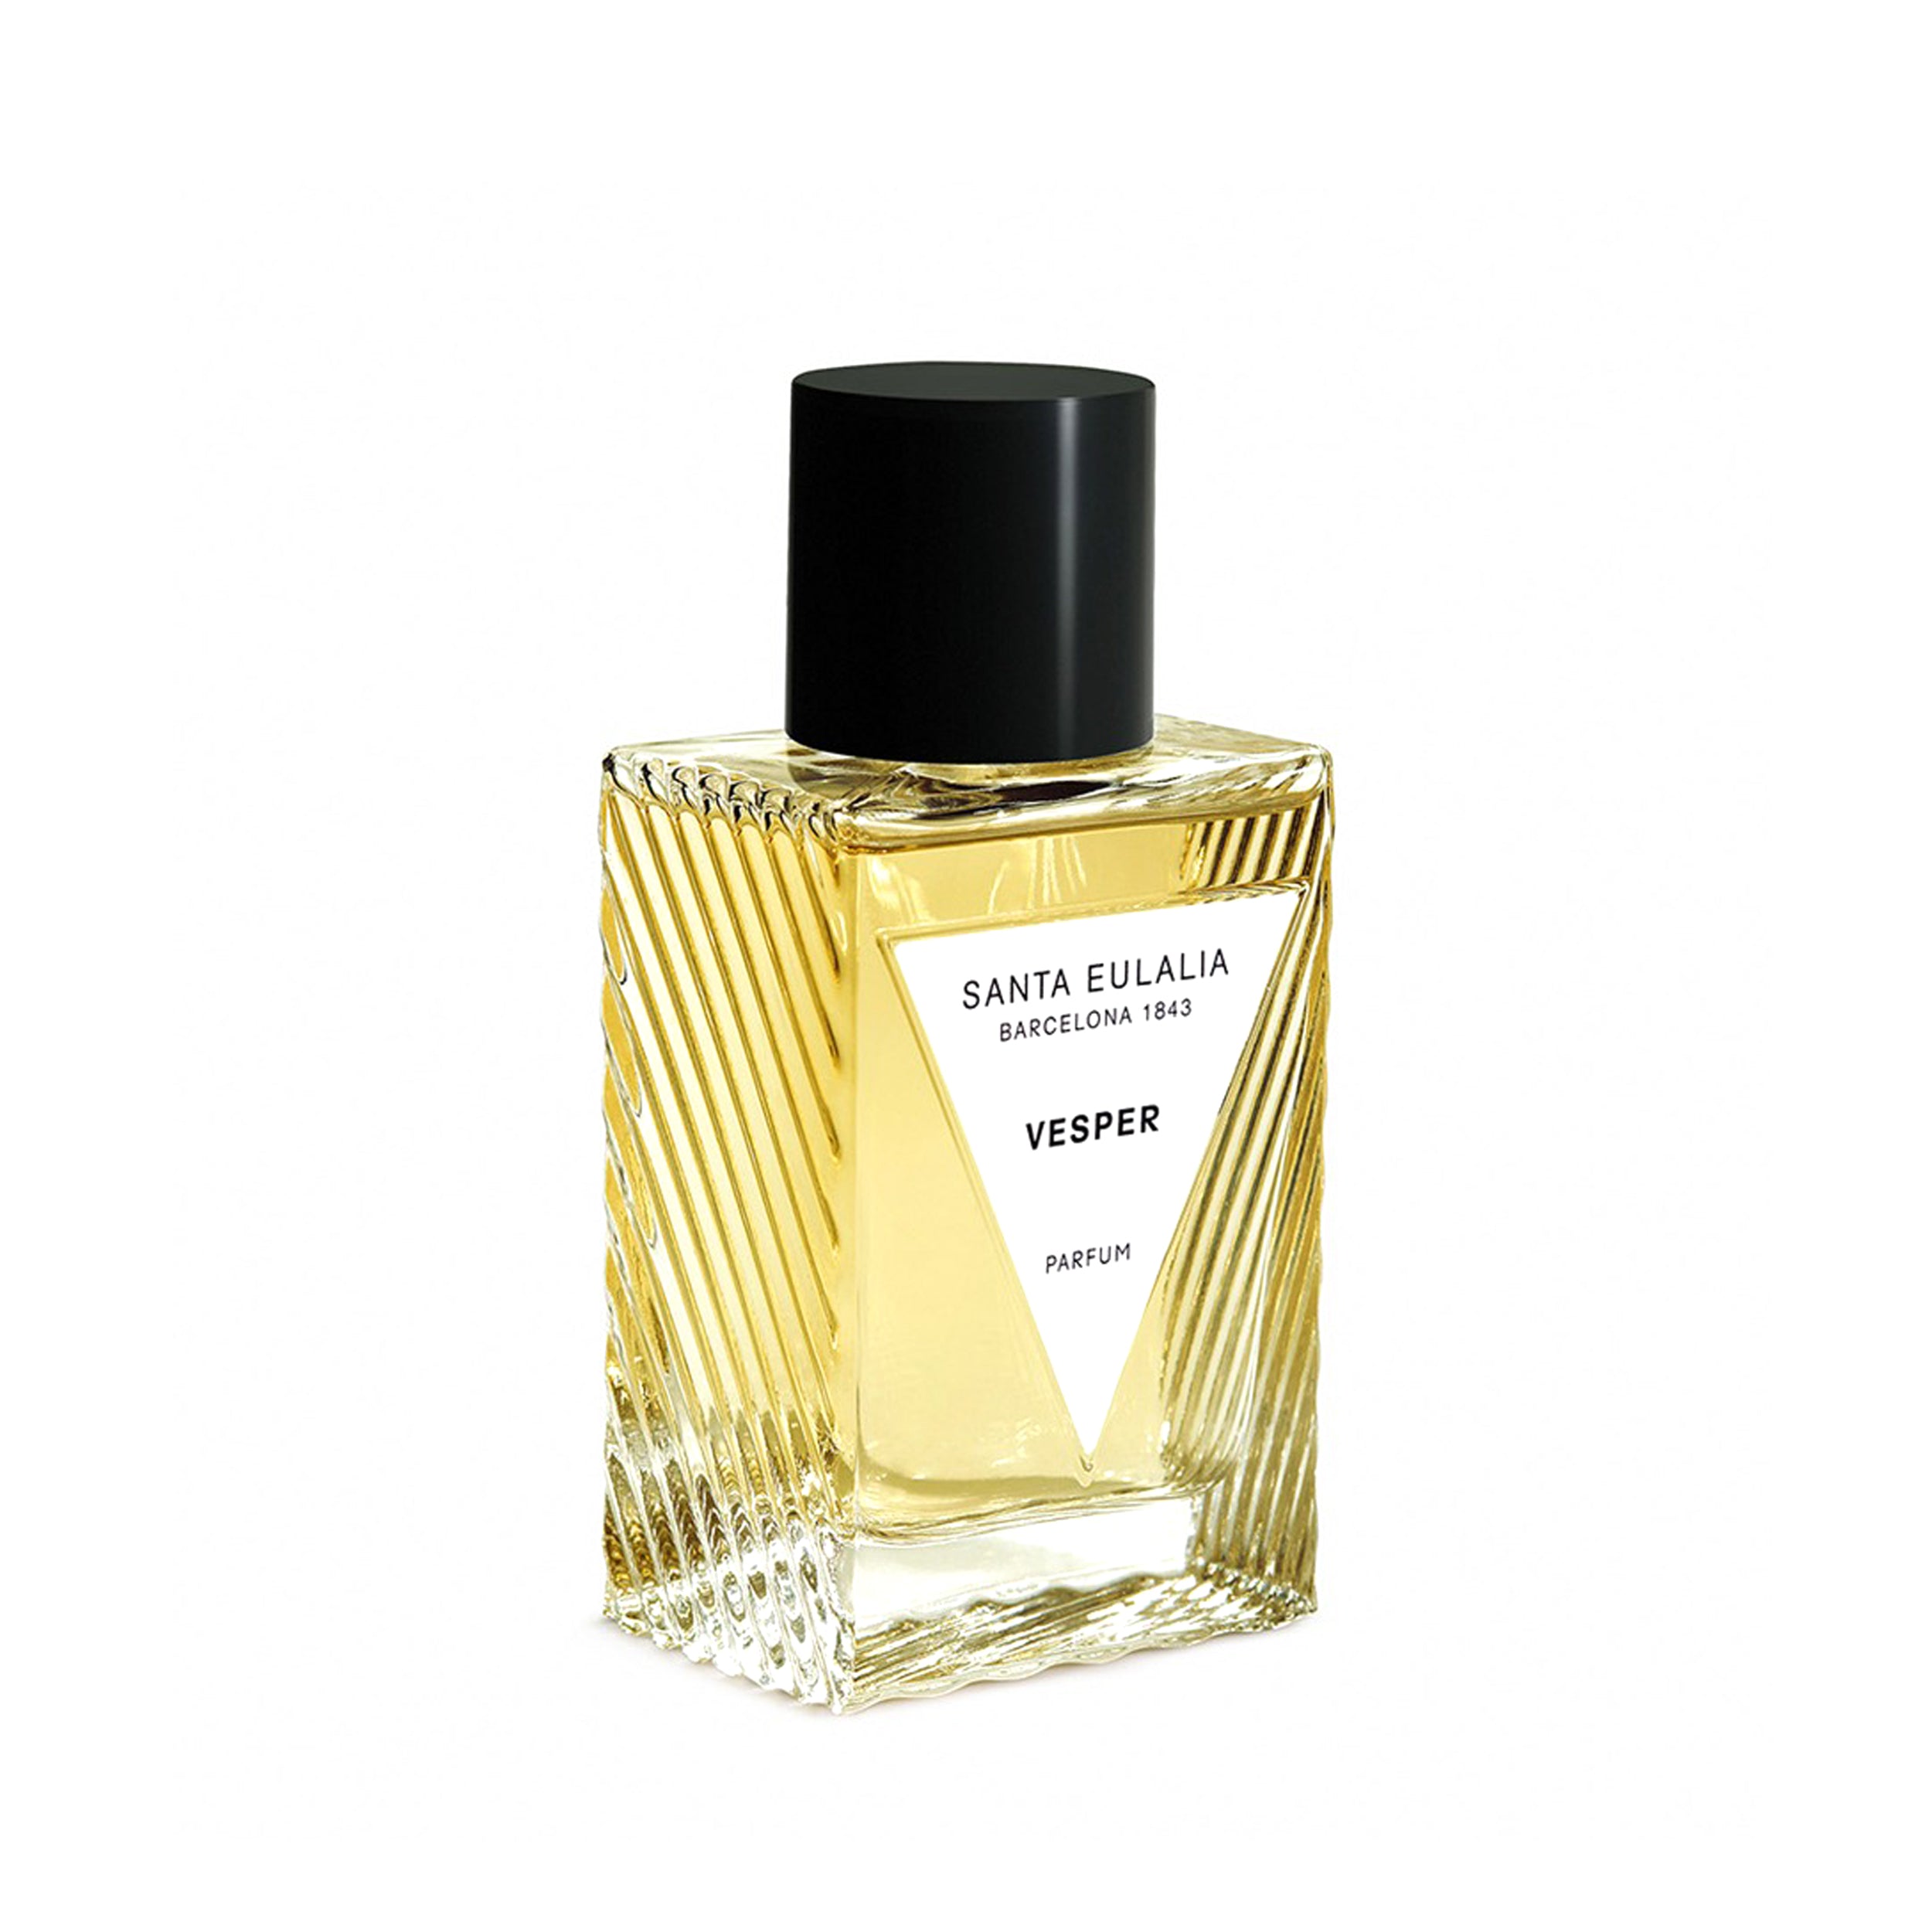 Louis Vuitton Pur Oud Scent Molecule Concentrated Ultra Premium Perfume Oil  